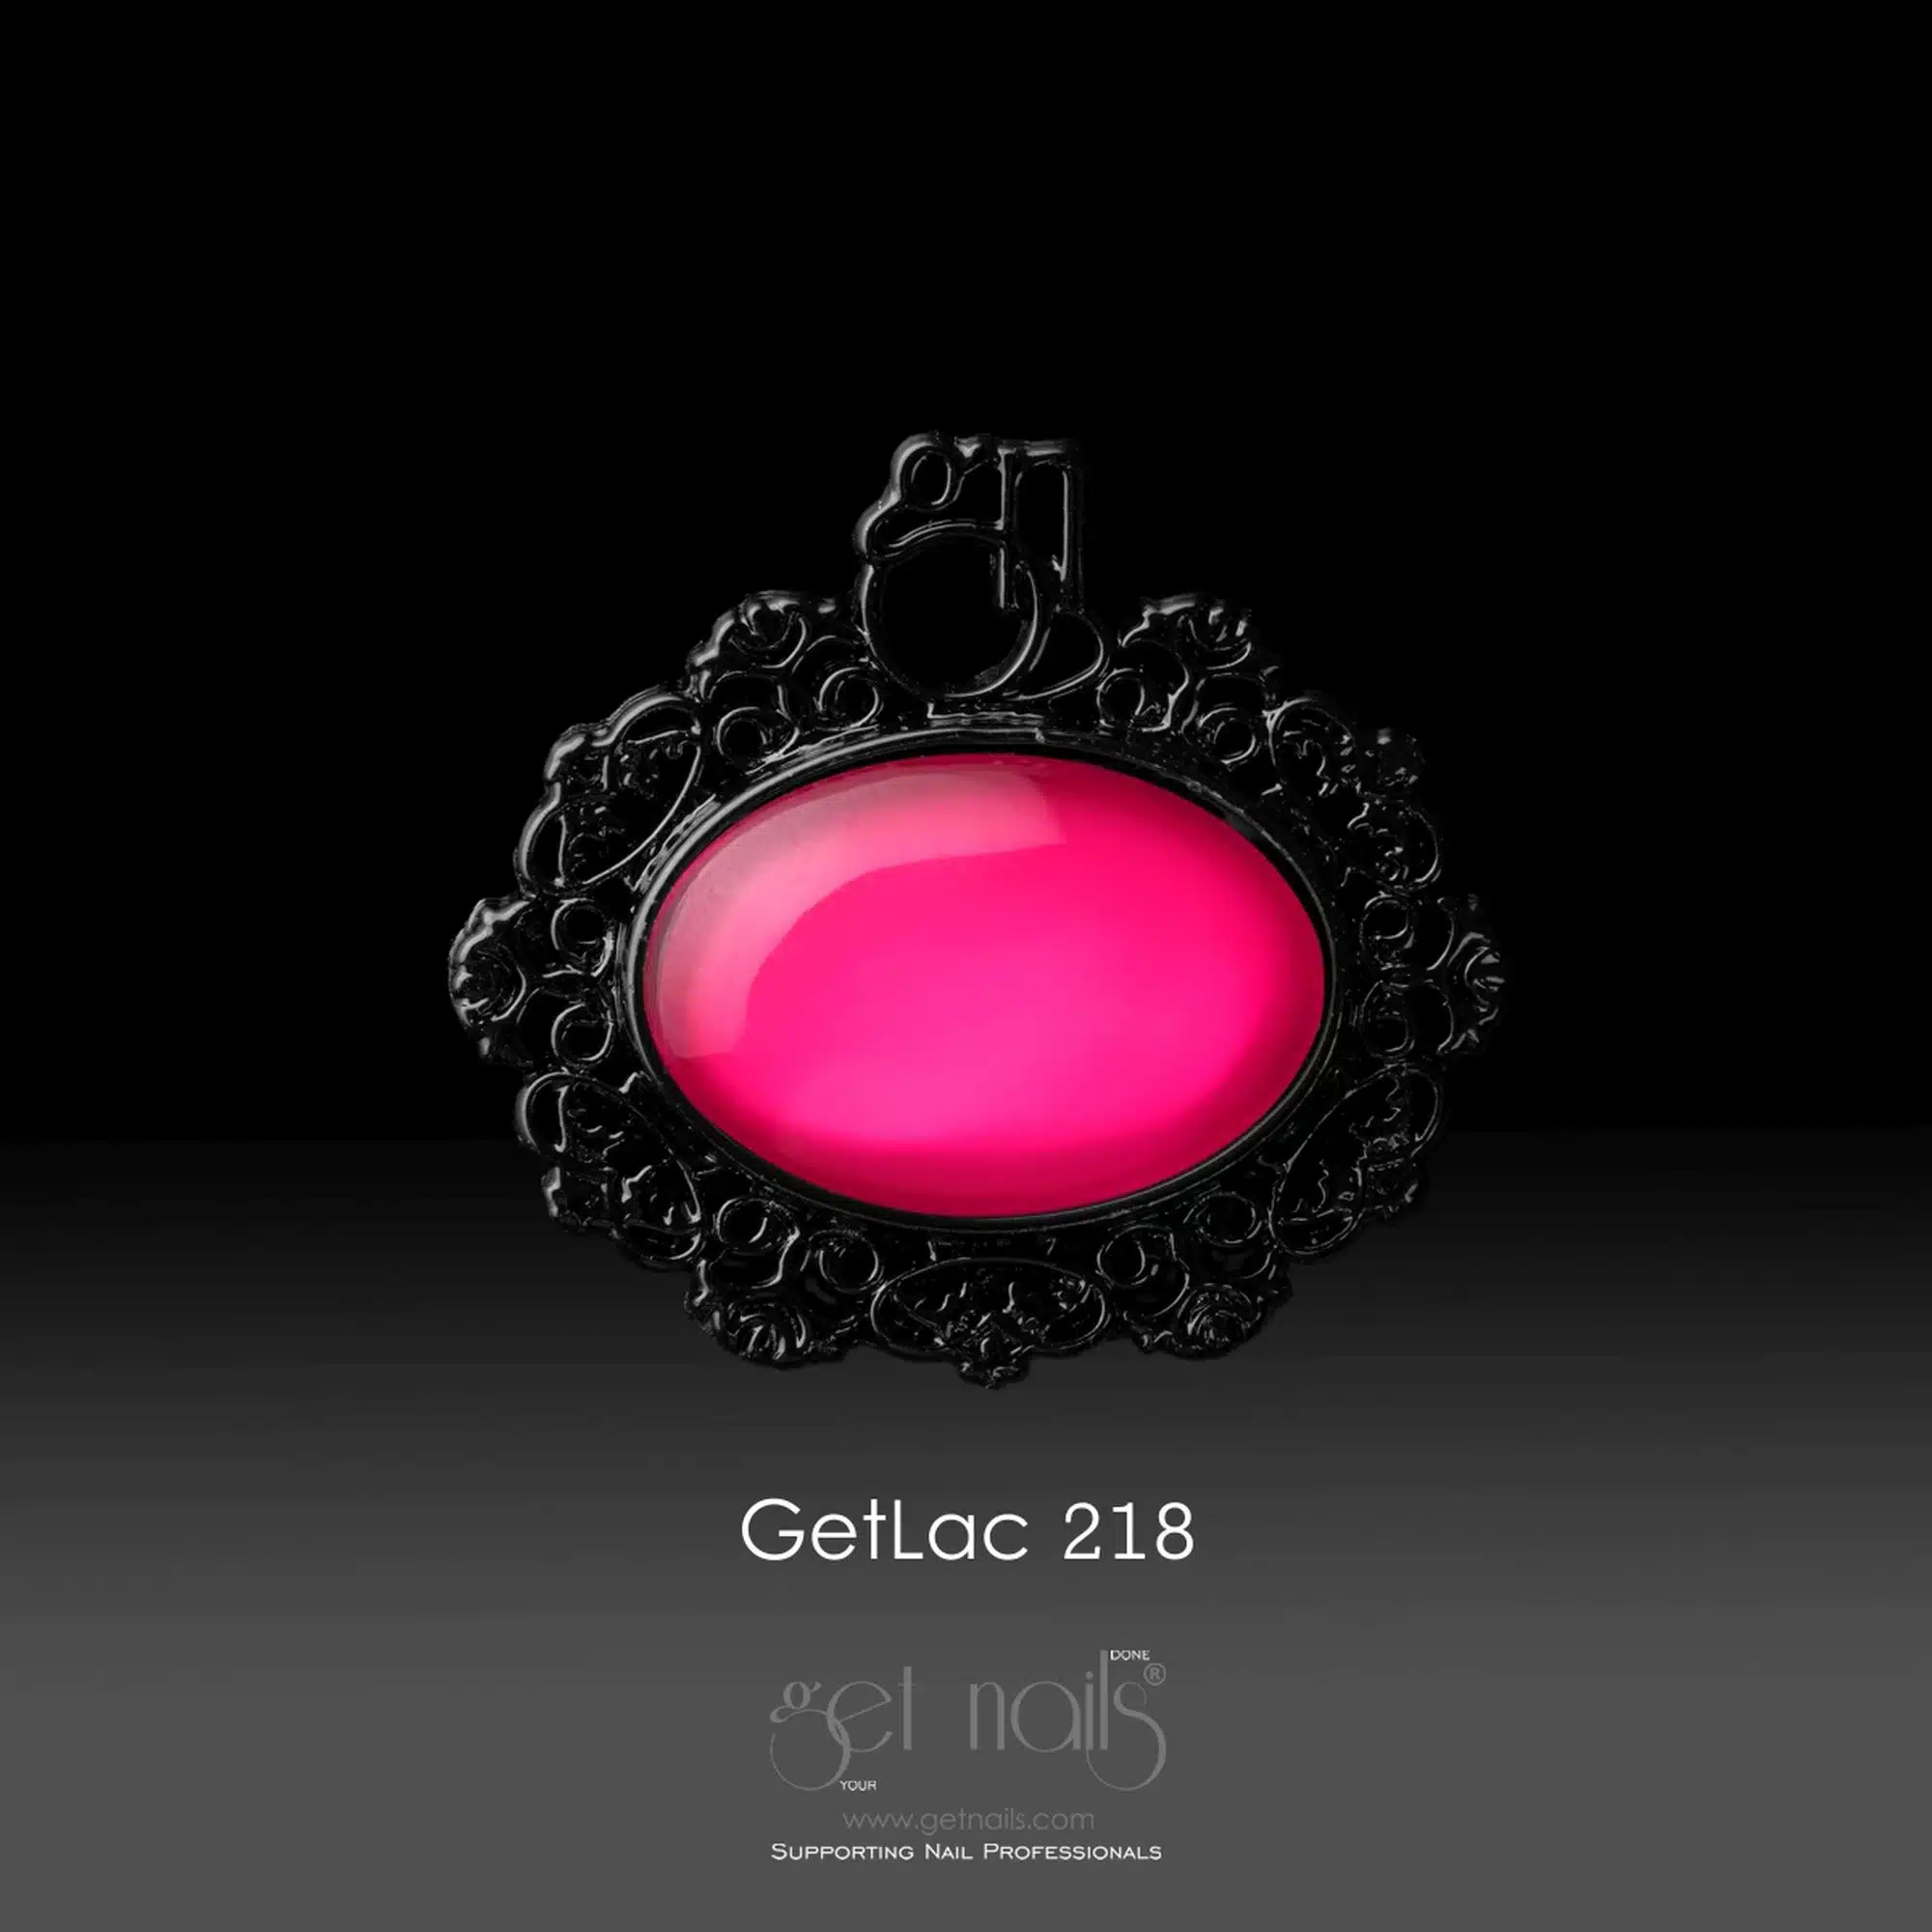 Get Nails Austria - GetLac 218 Neon Pink 15 g